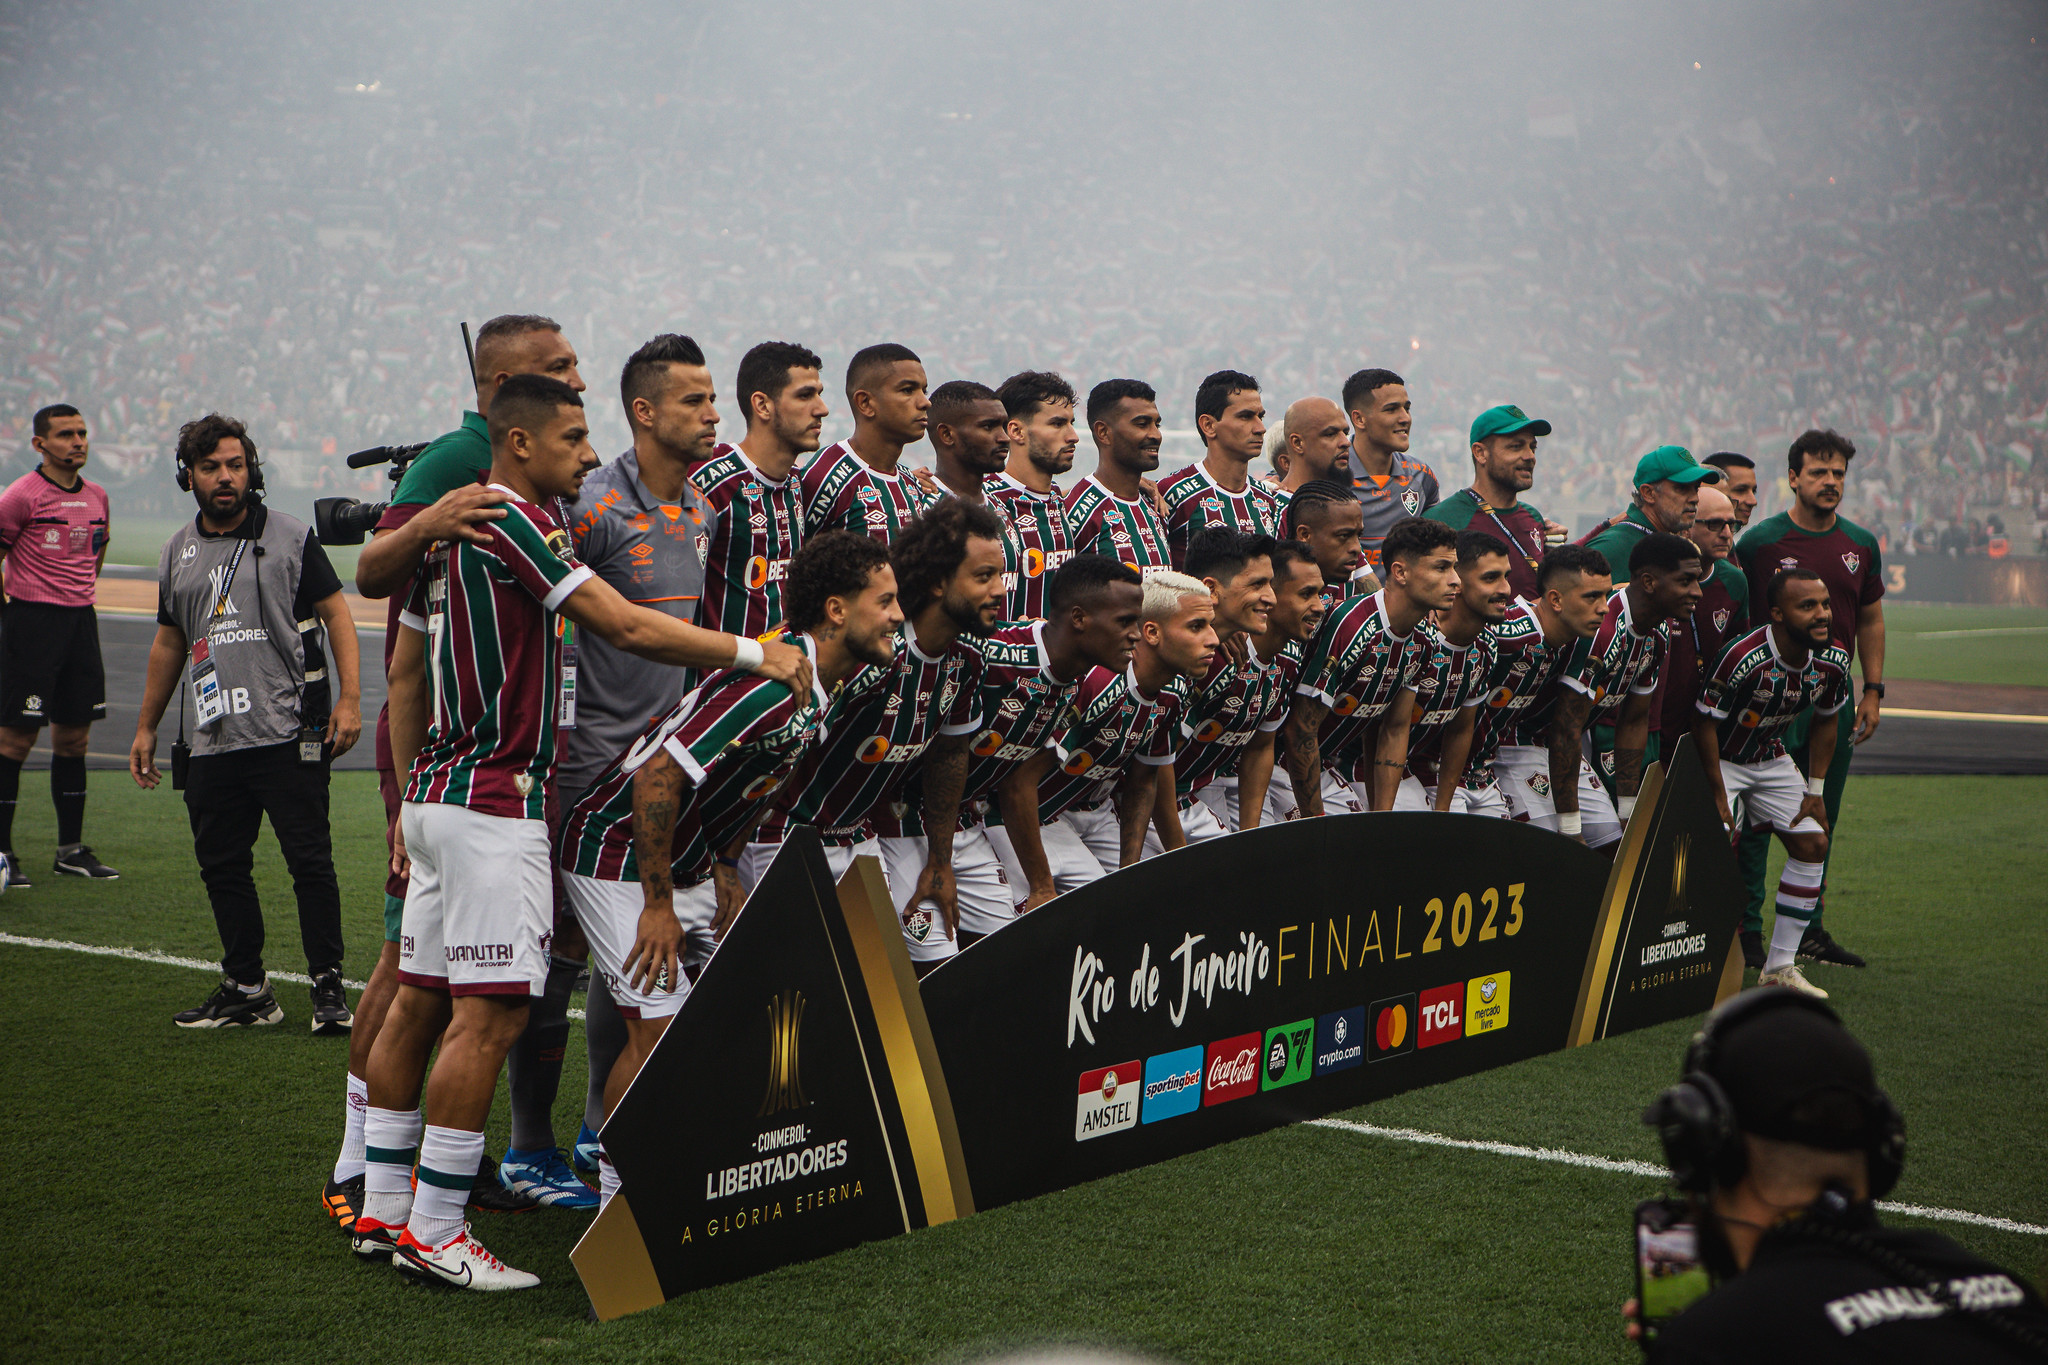 O Palmeiras está classificado para o primeiro Mundial de Clubes